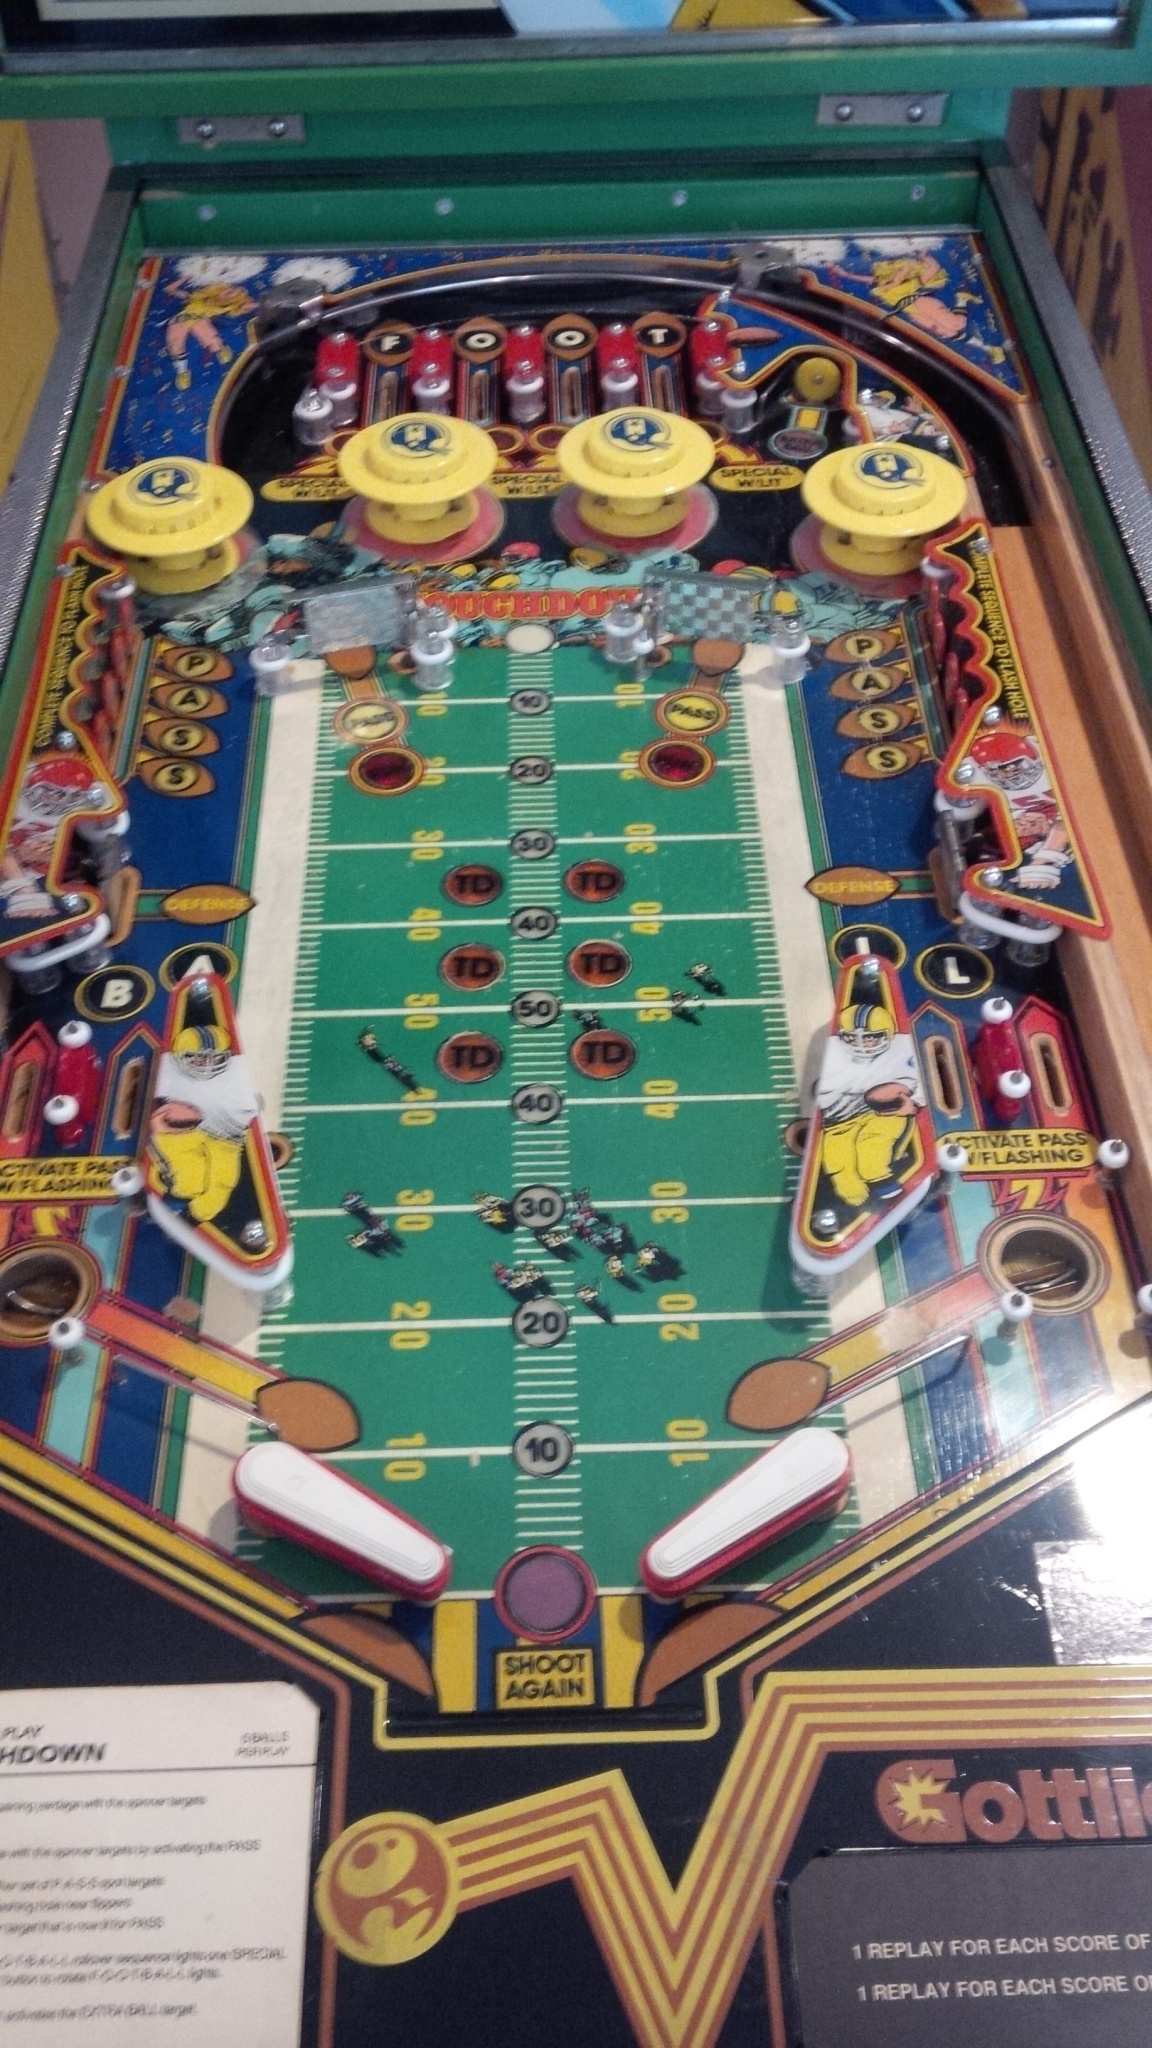 Gottlieb 300 pinball machine for sale